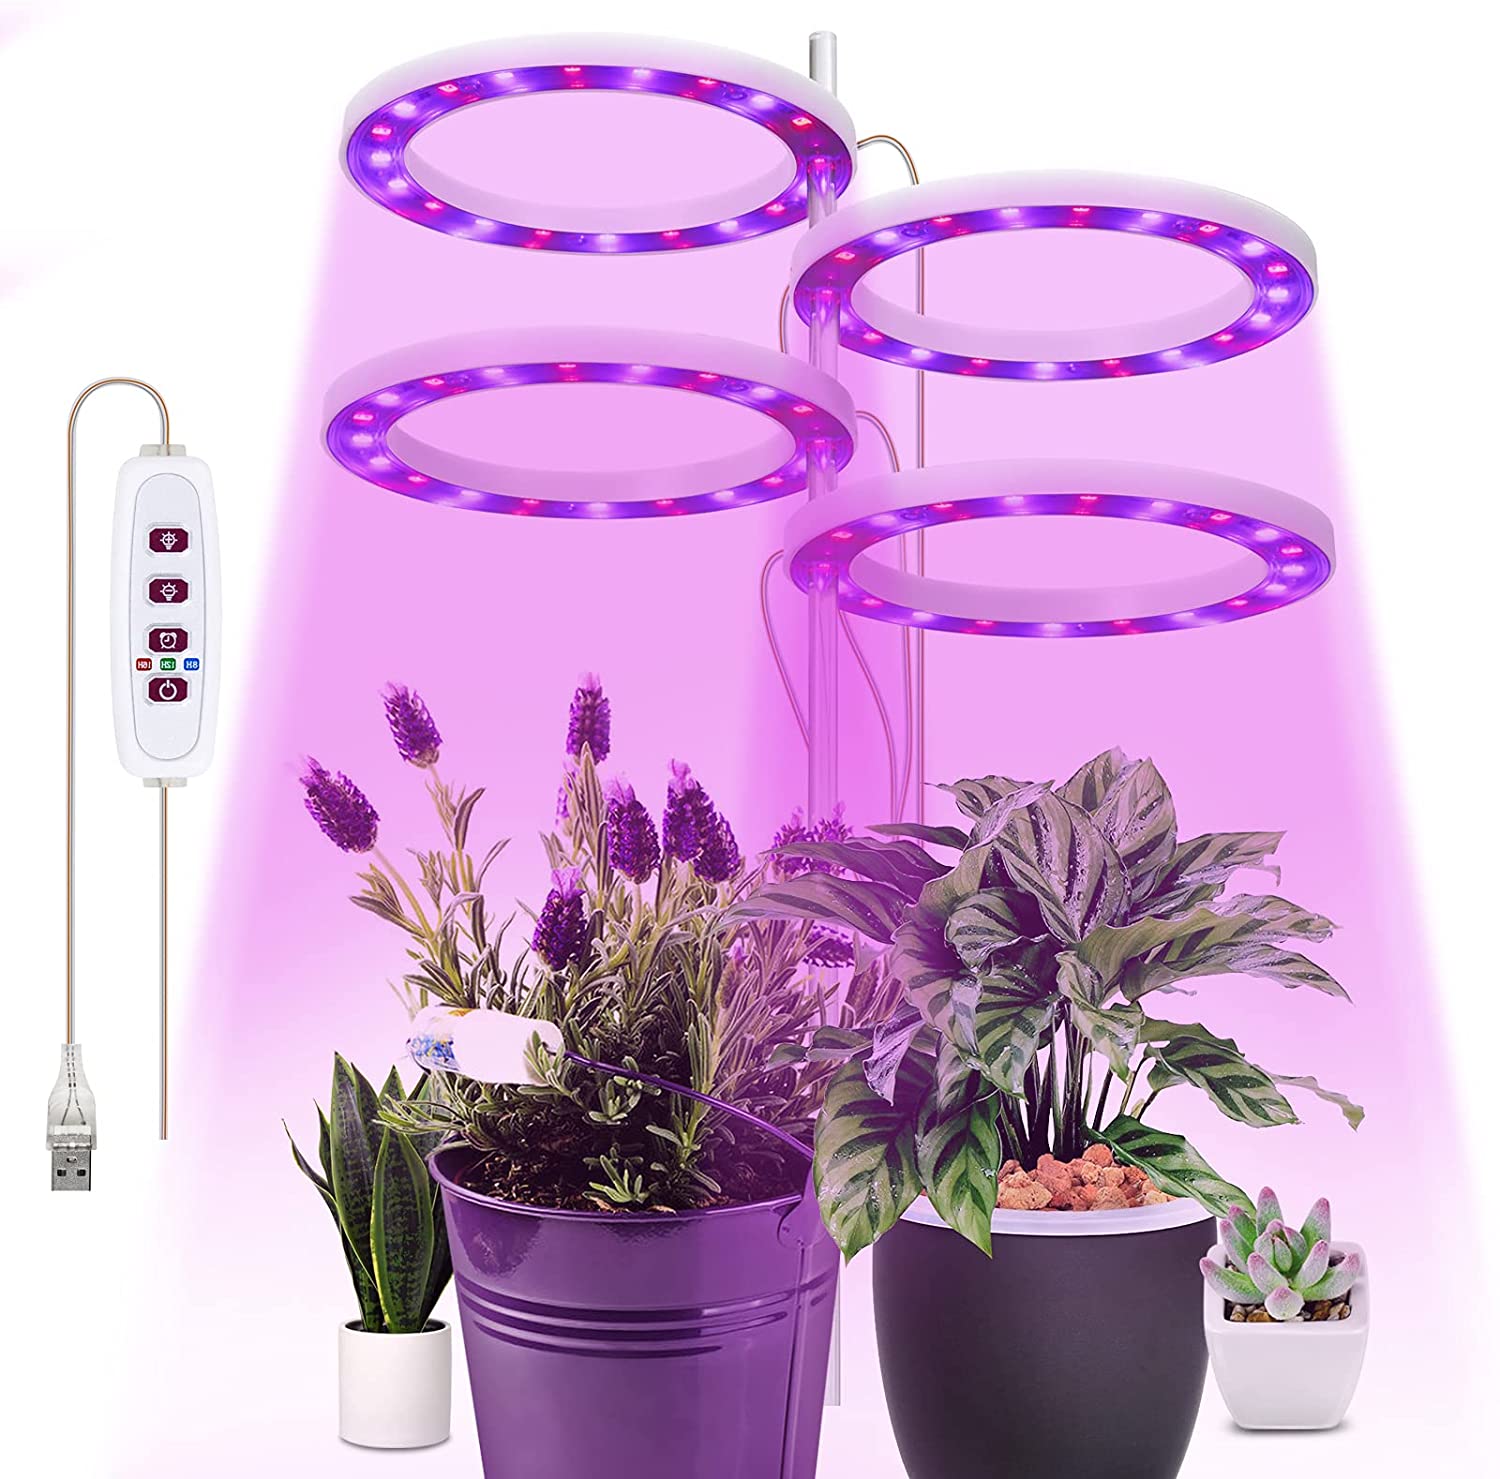 Plant growing LED light